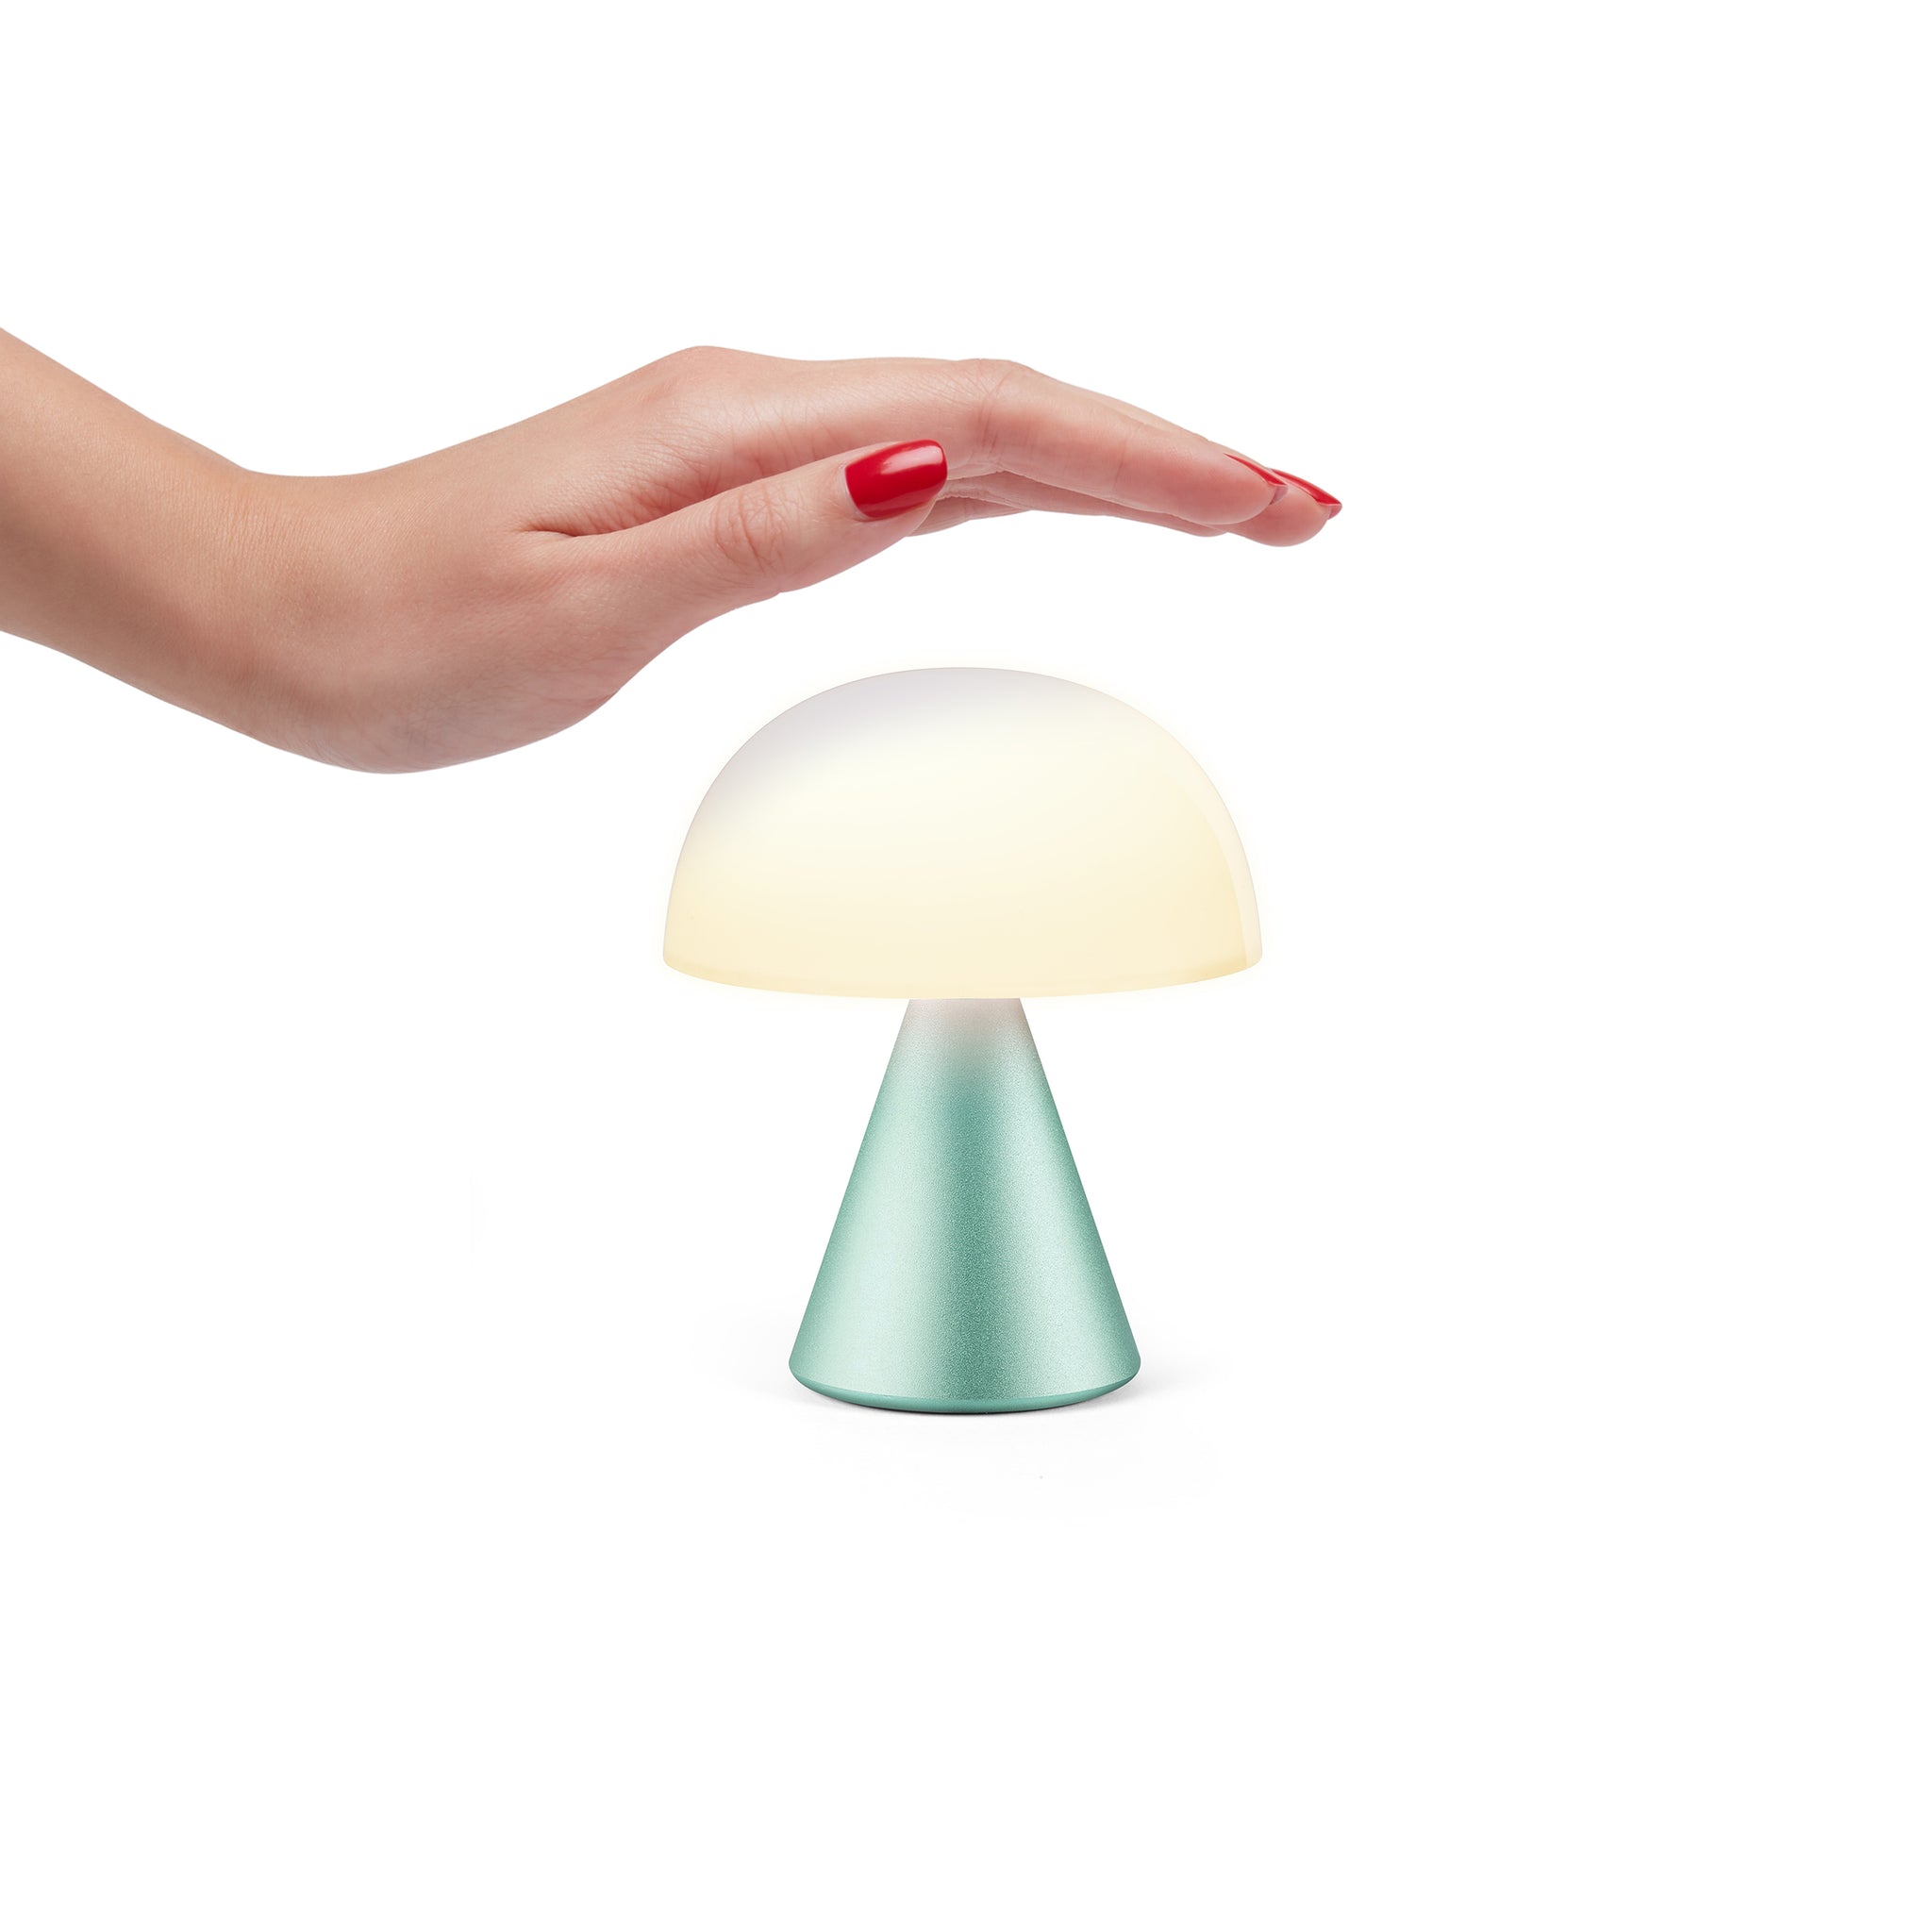 Lexon Mina Medium Mint Groen│LH64M1│Oplaadbare LED-Lamp│bediening met hand boven lamp